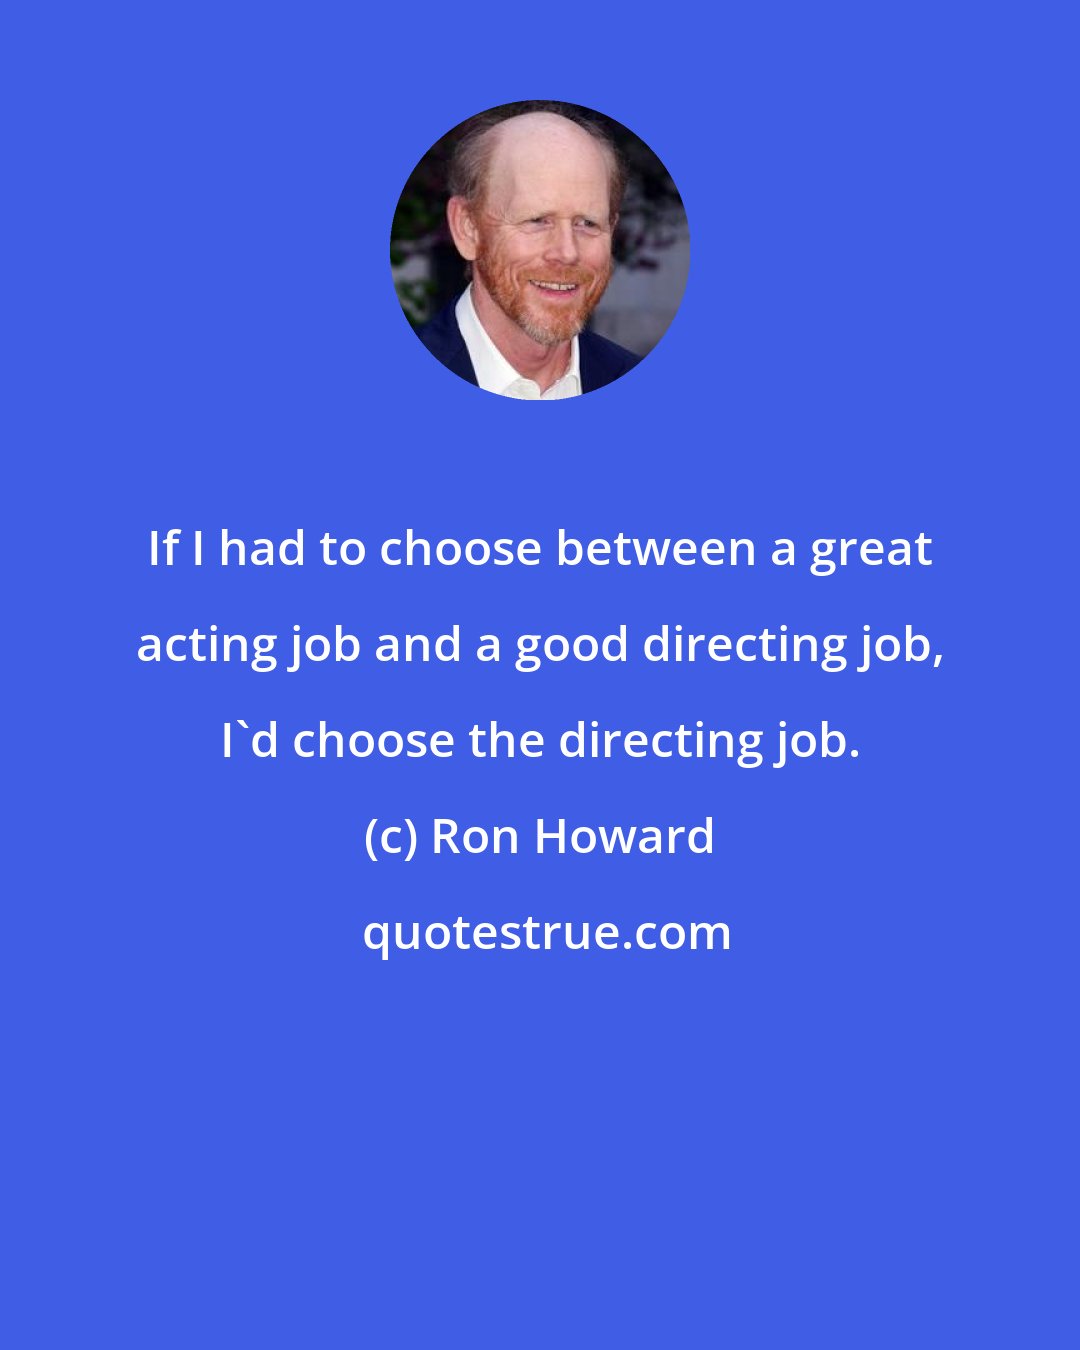 Ron Howard: If I had to choose between a great acting job and a good directing job, I'd choose the directing job.